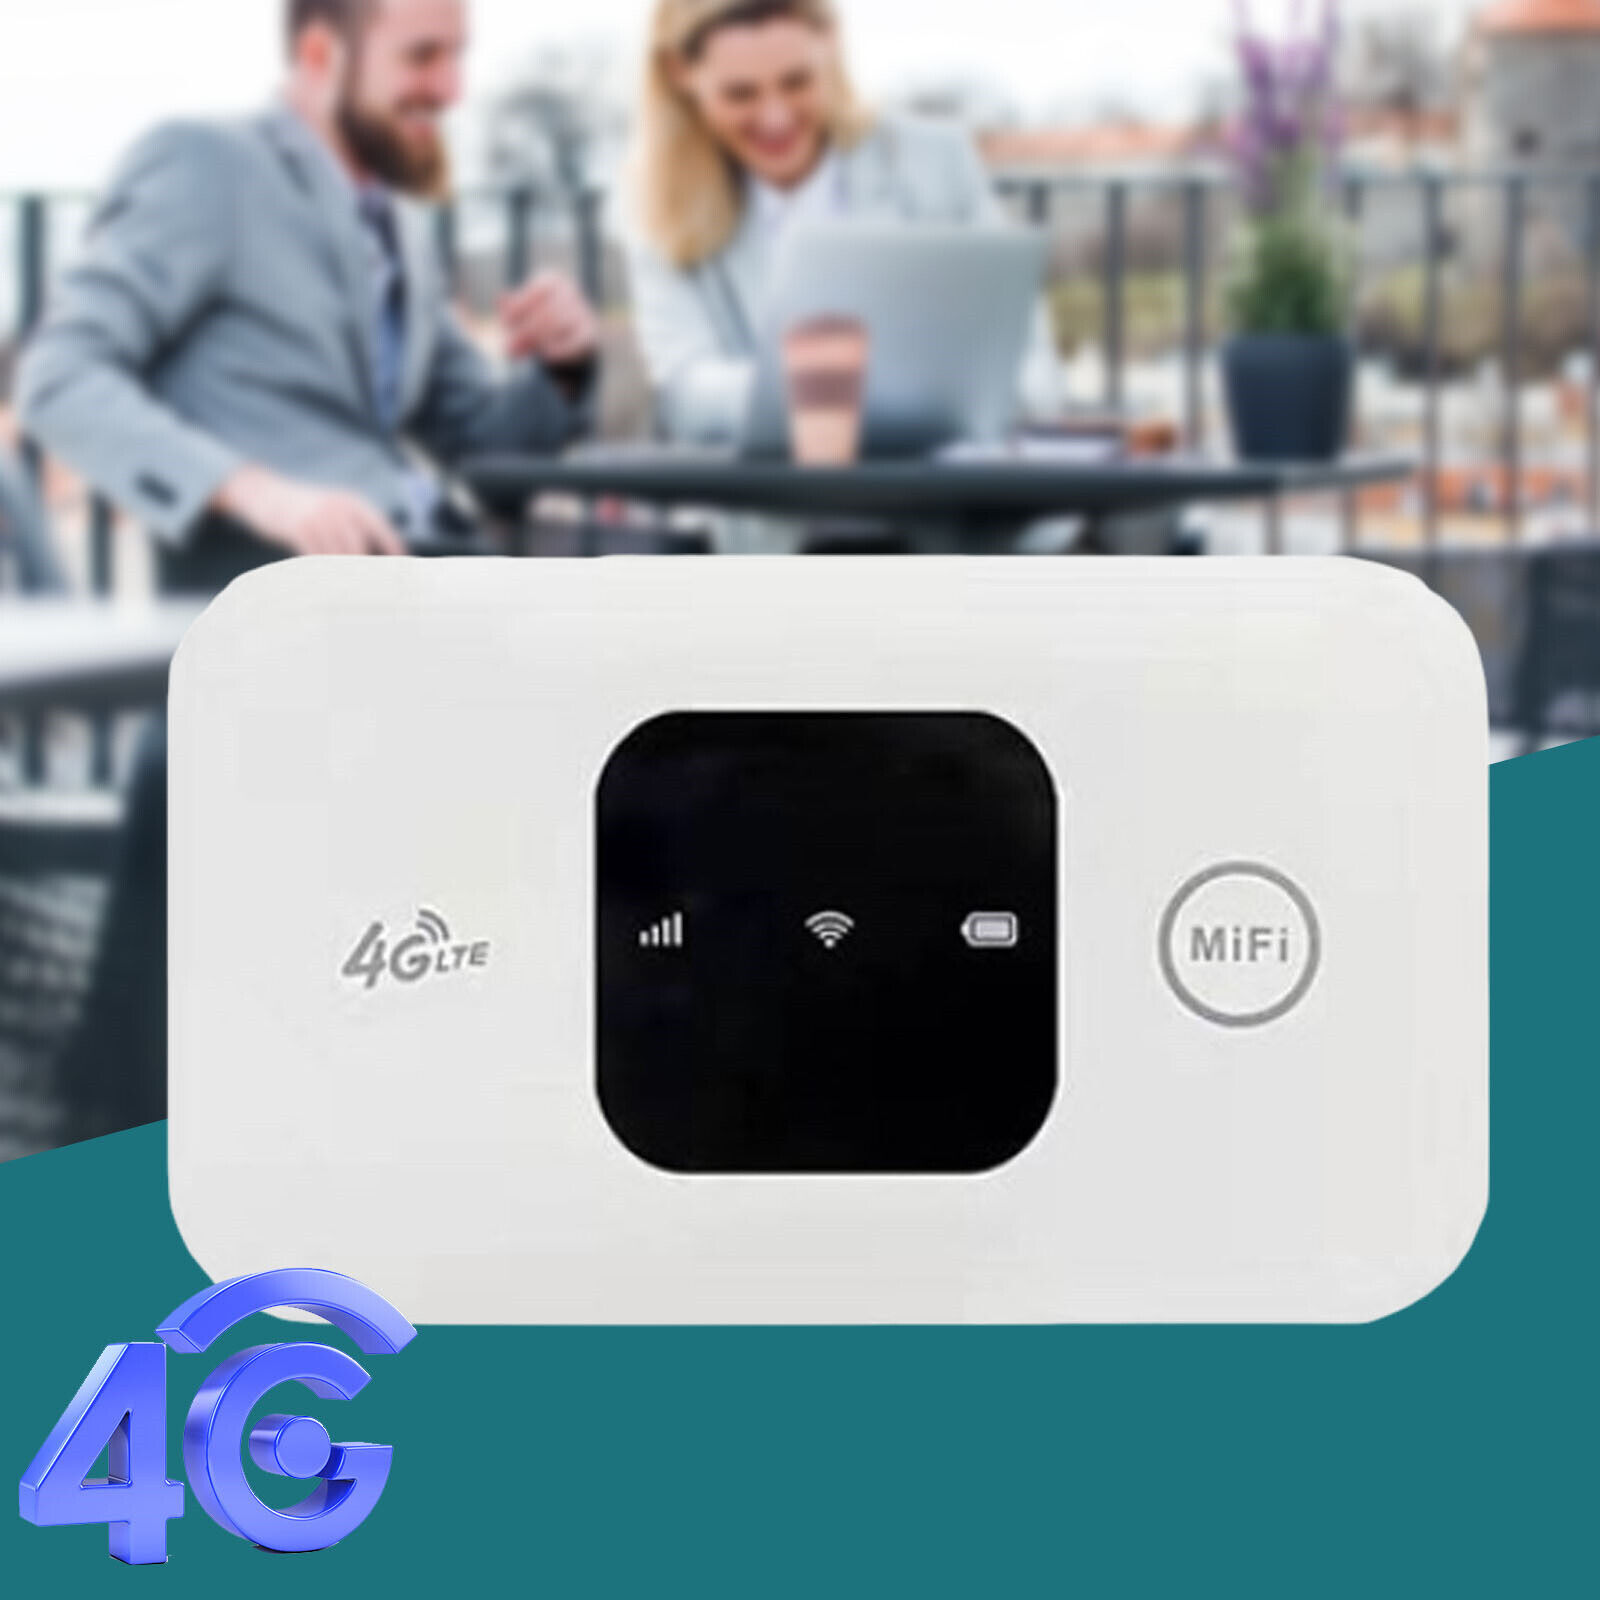 Mini Protable 4G LTE Mobile Hotspot Router Mobile WiFi Hotspot Wireless Internet